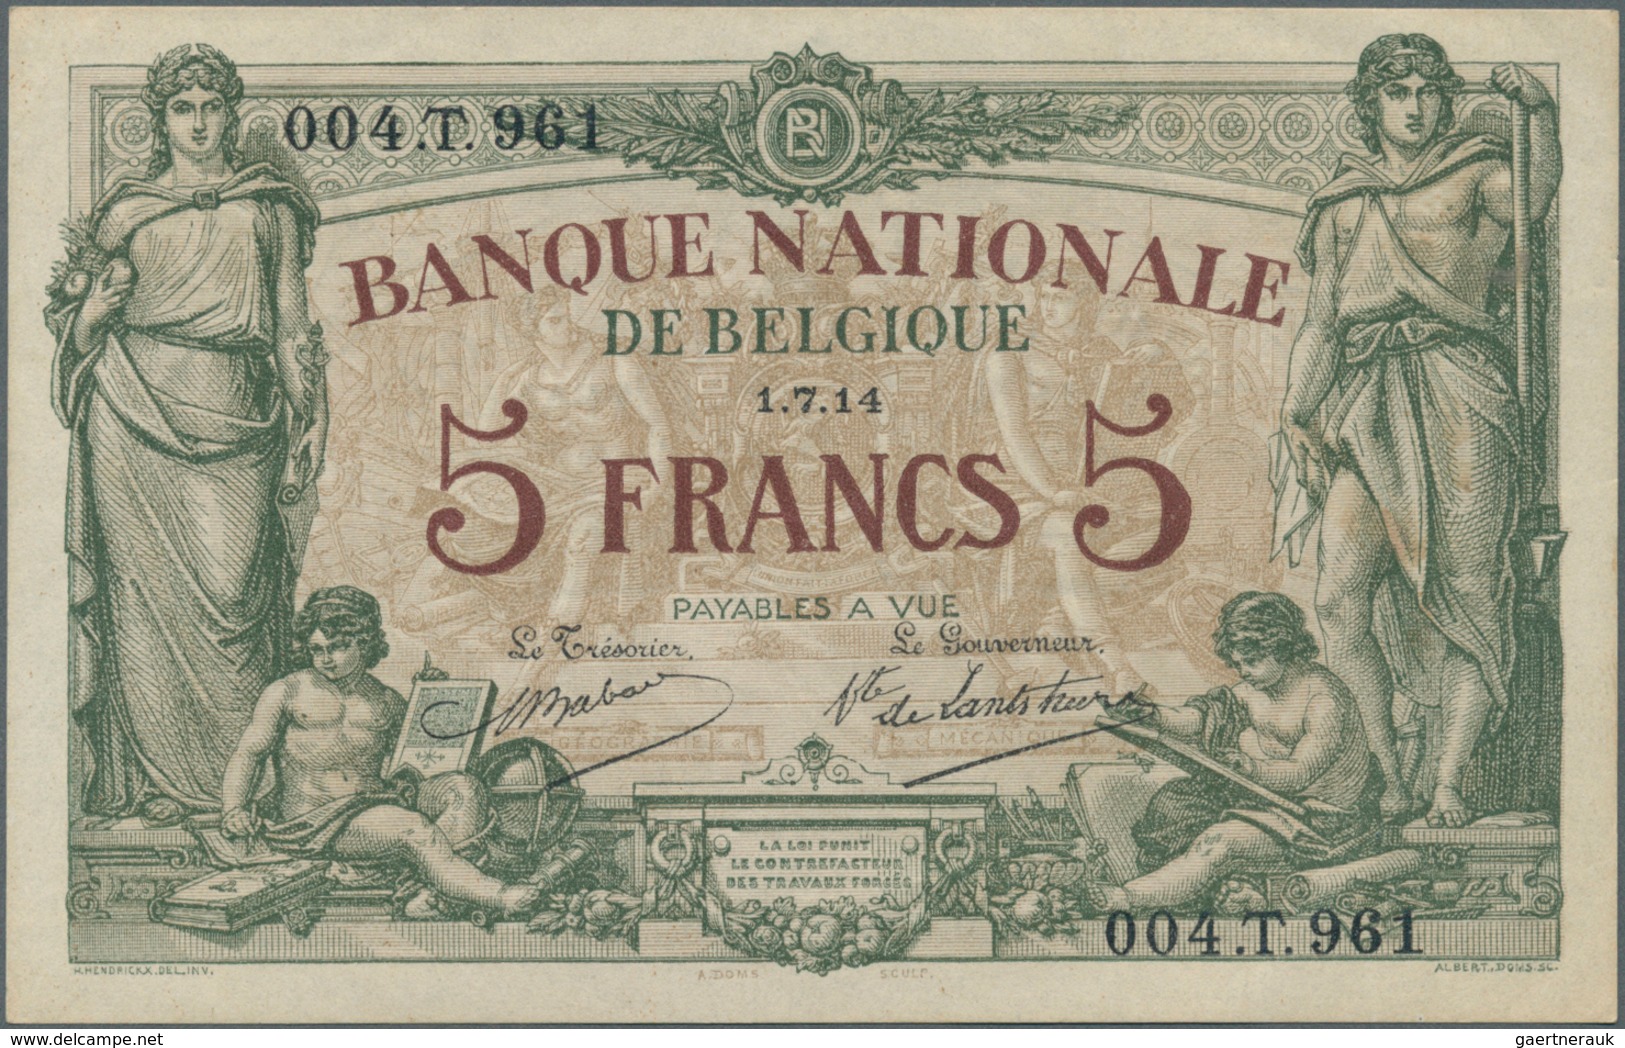 01121 Belgium / Belgien: 5 Francs 1914 P. 75, Unfolded But Light Handling In Paper, Condition: AUNC. - [ 1] …-1830 : Antes De La Independencia